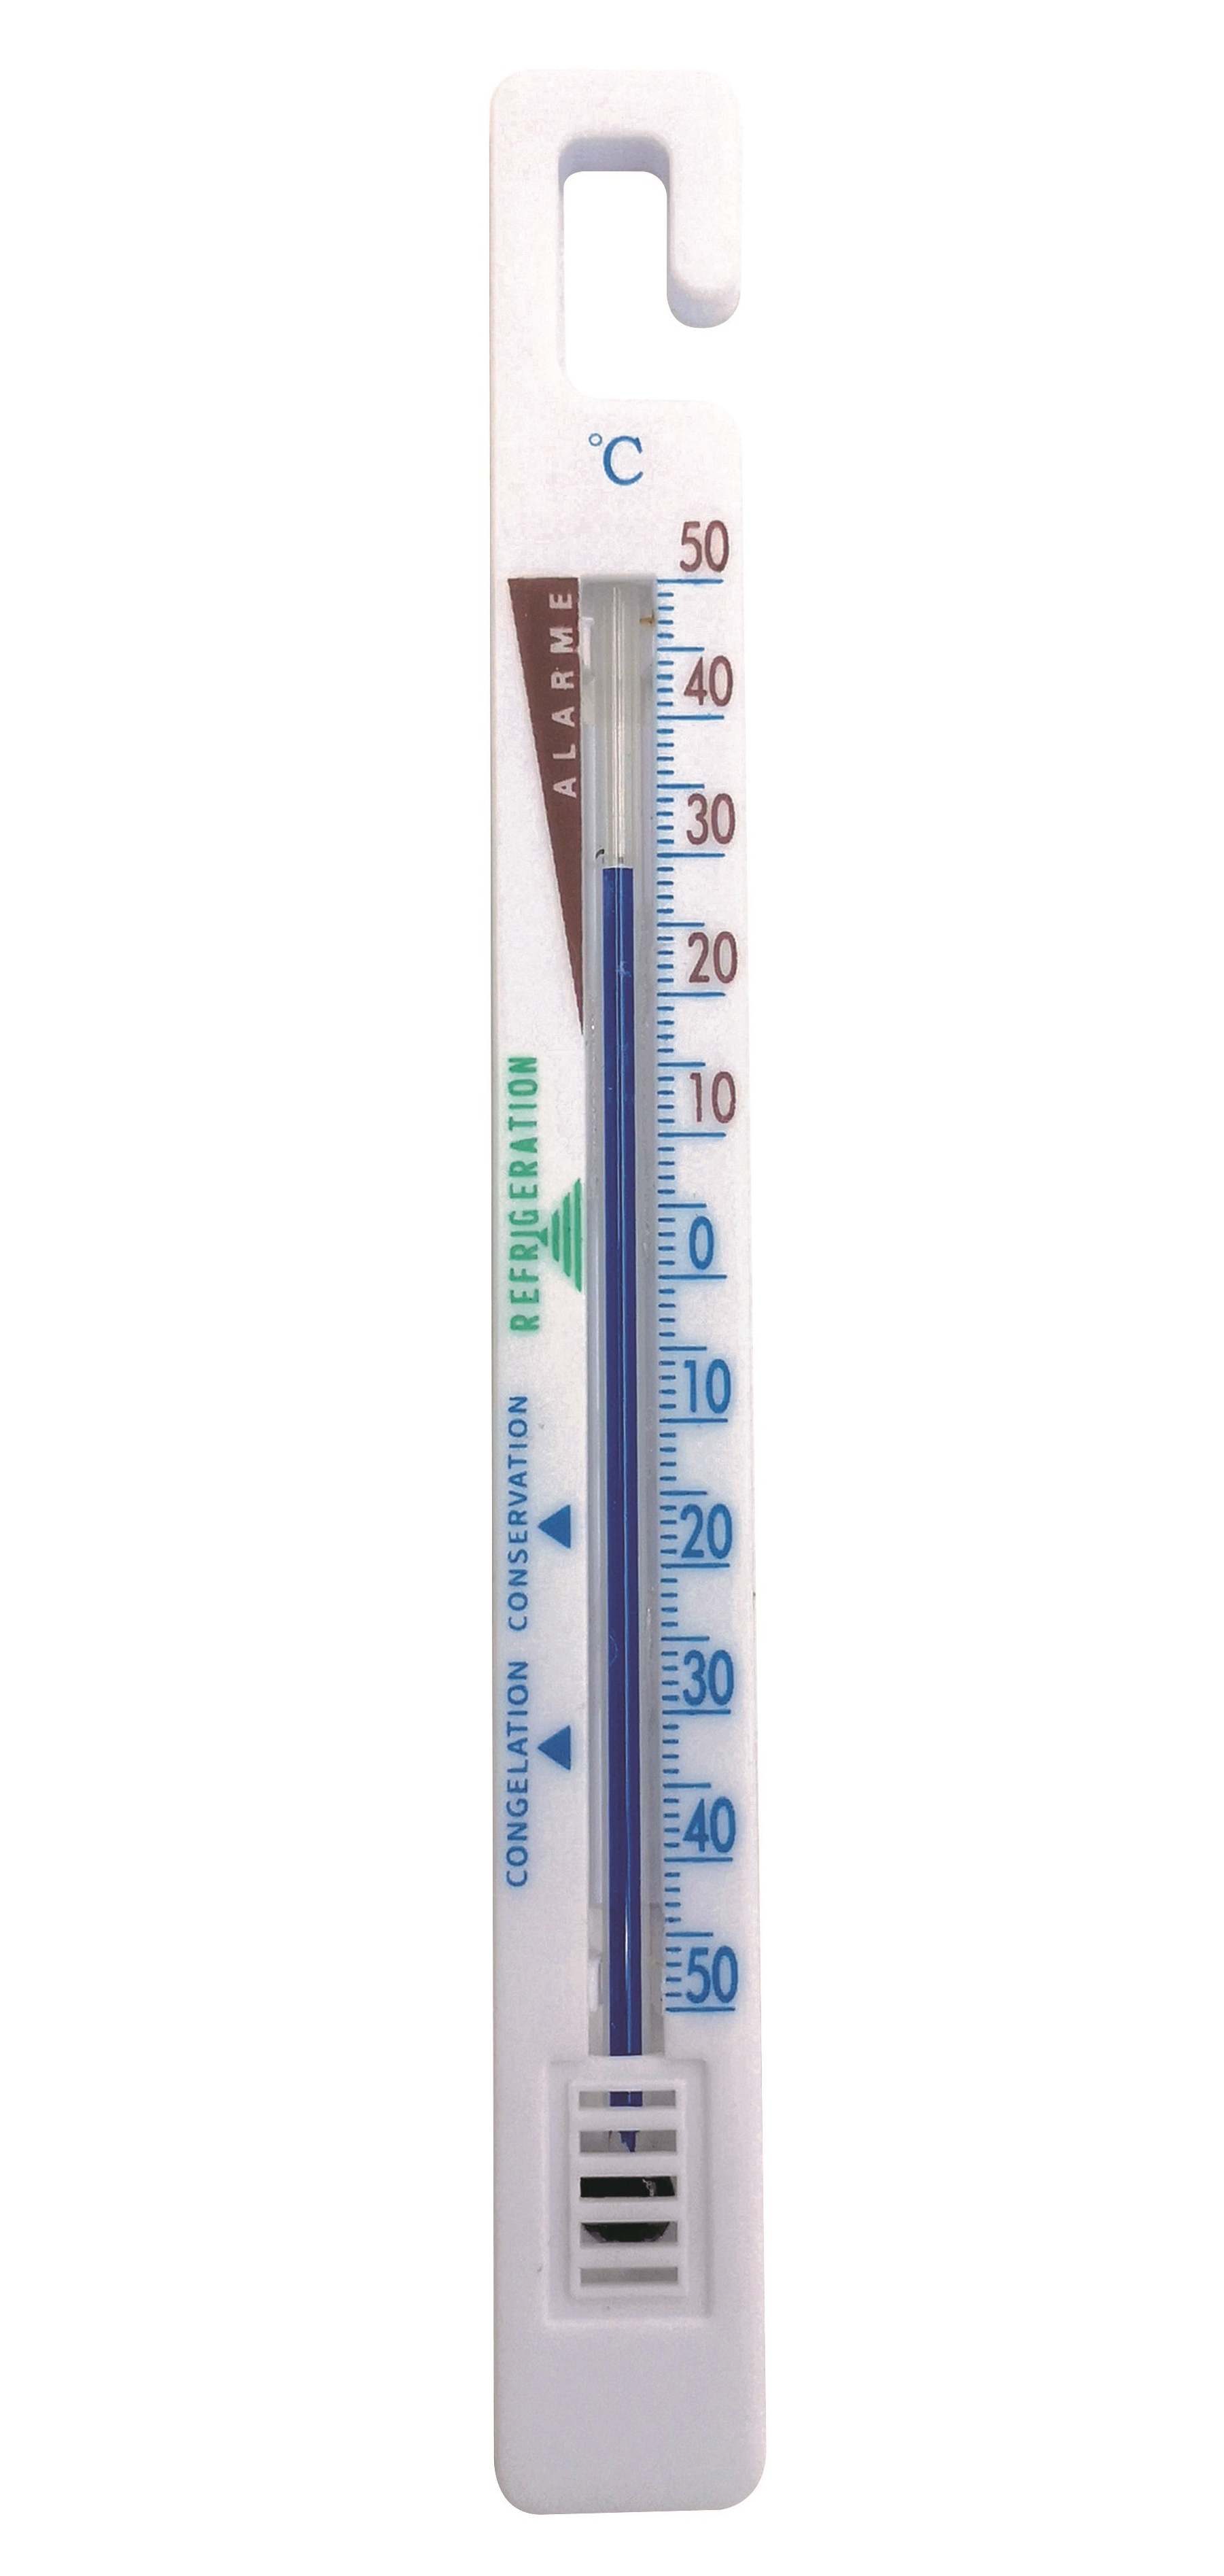 HORECATECH digital fridge and freezer thermometer